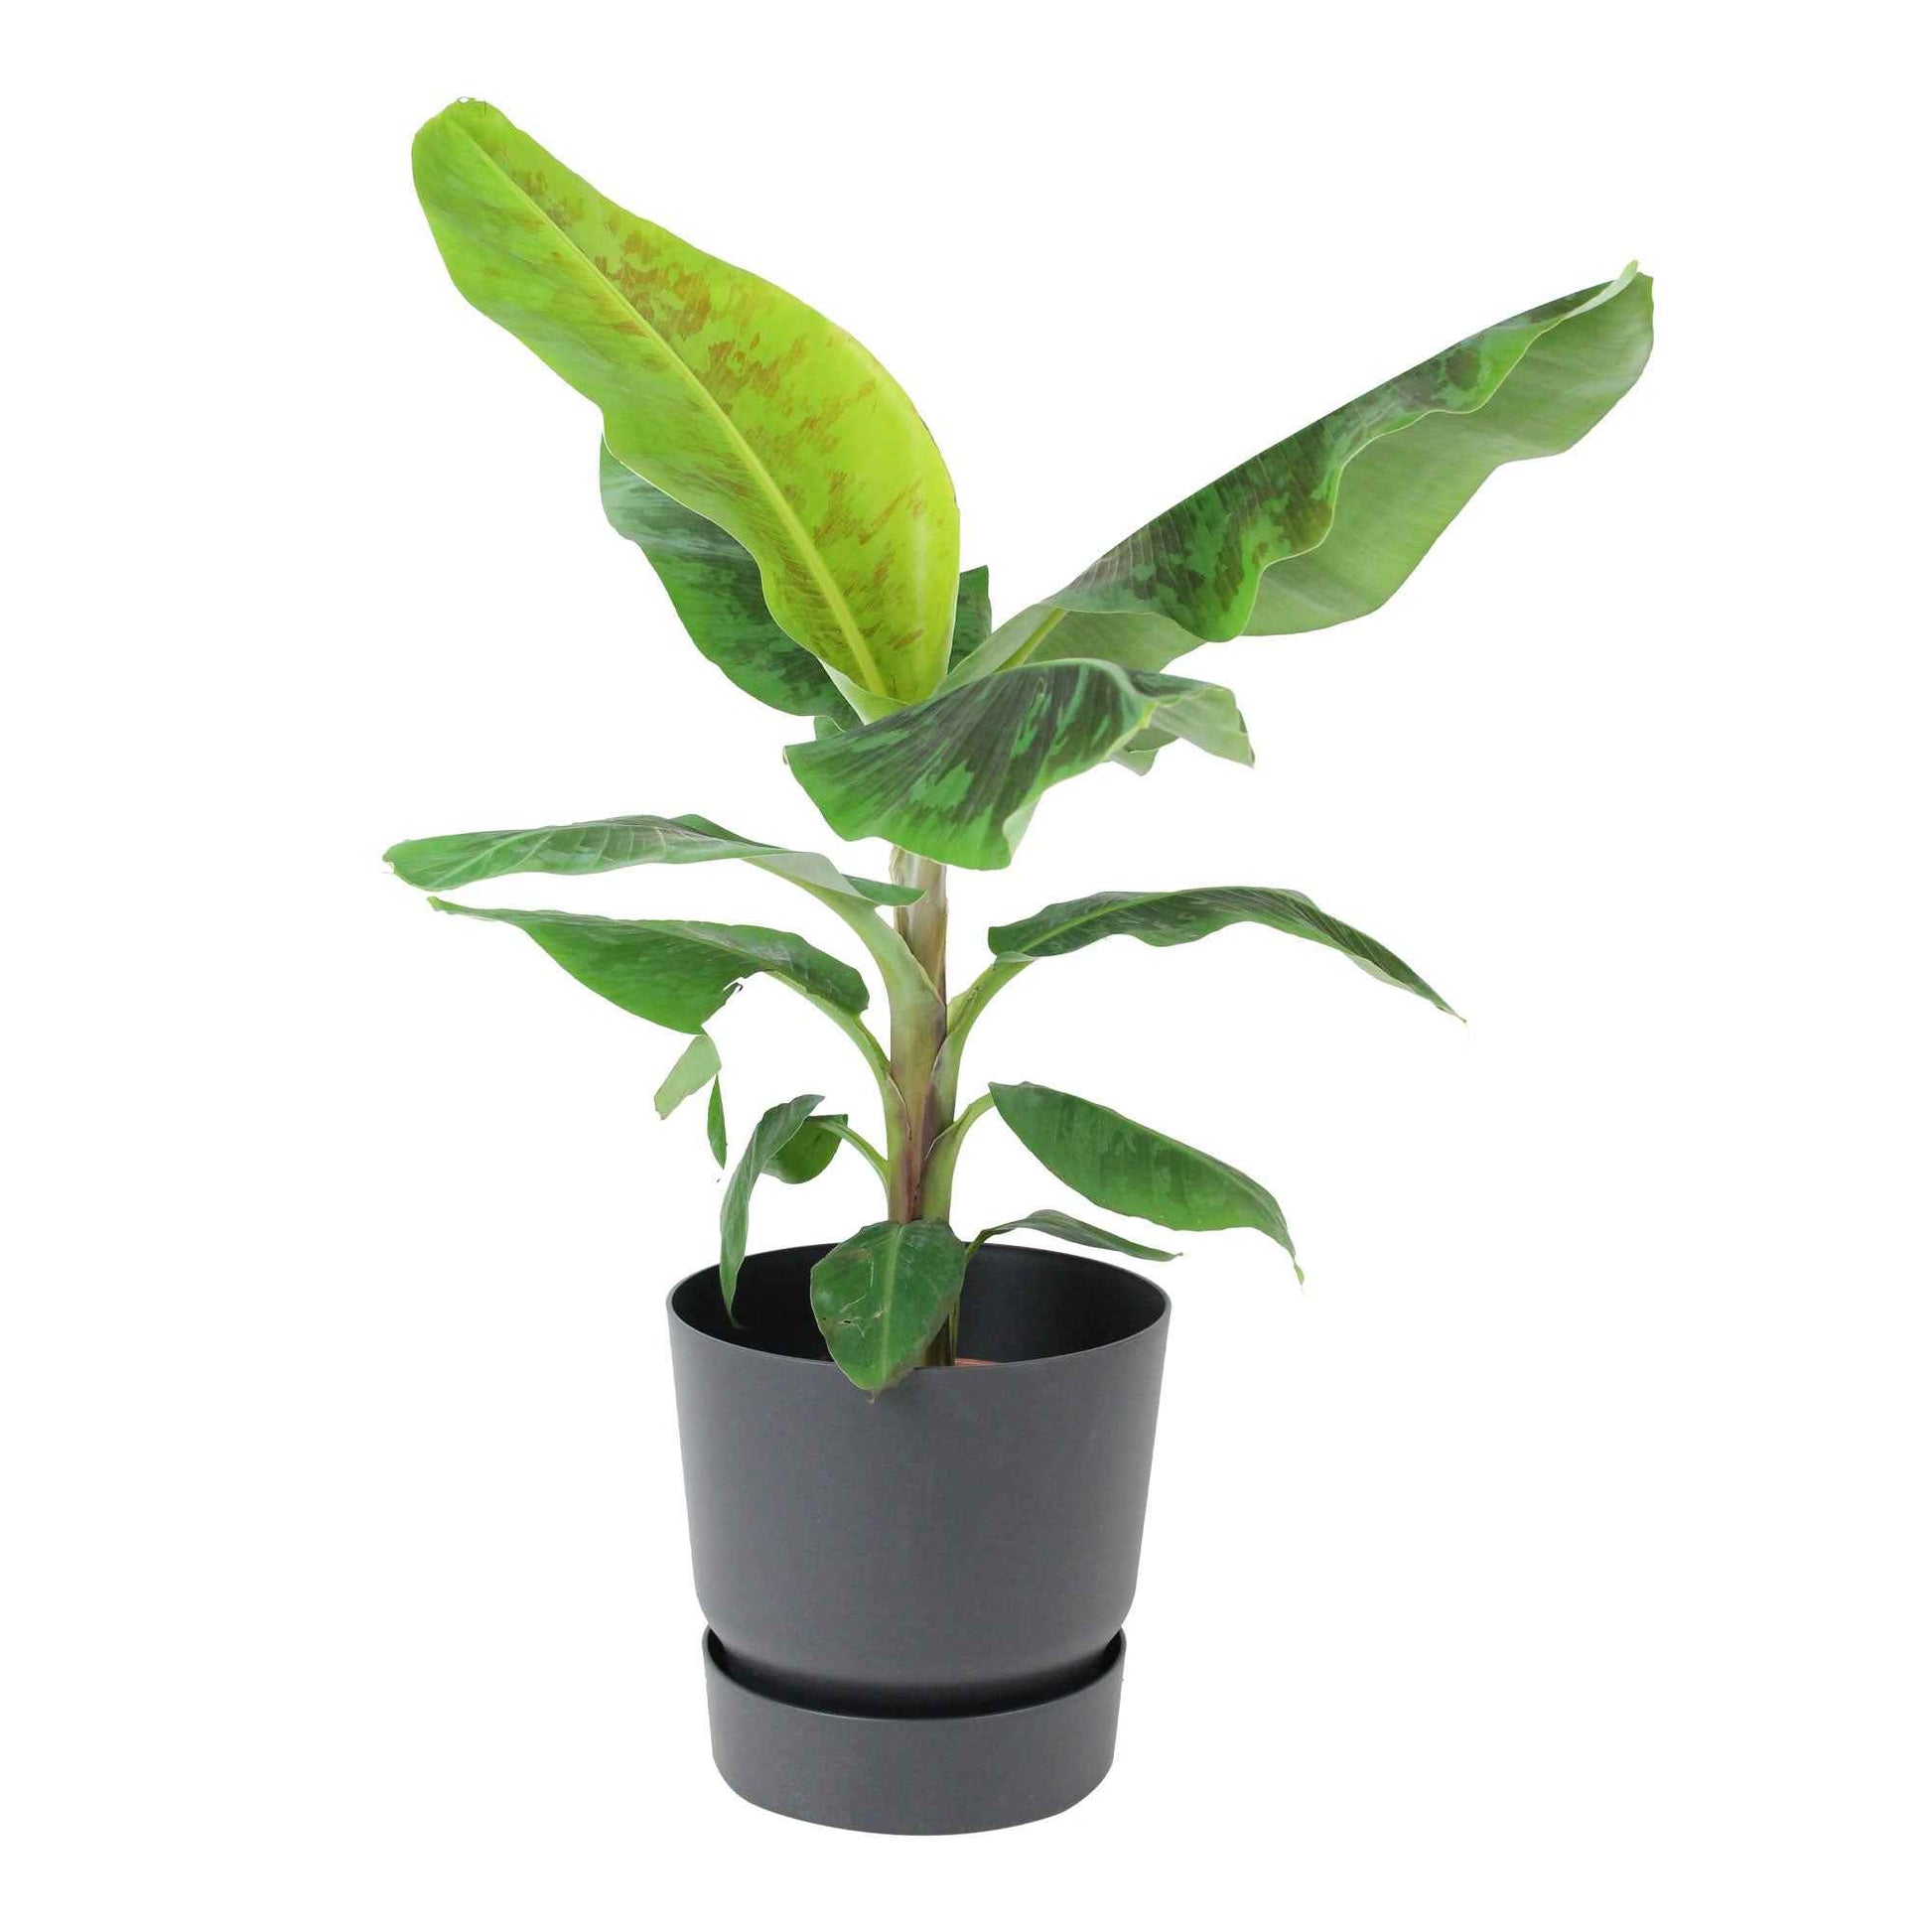 Bananenpflanze Musa 'Cavendish' inkl. Dekotopf schwarz - Pflanzen mit Topf